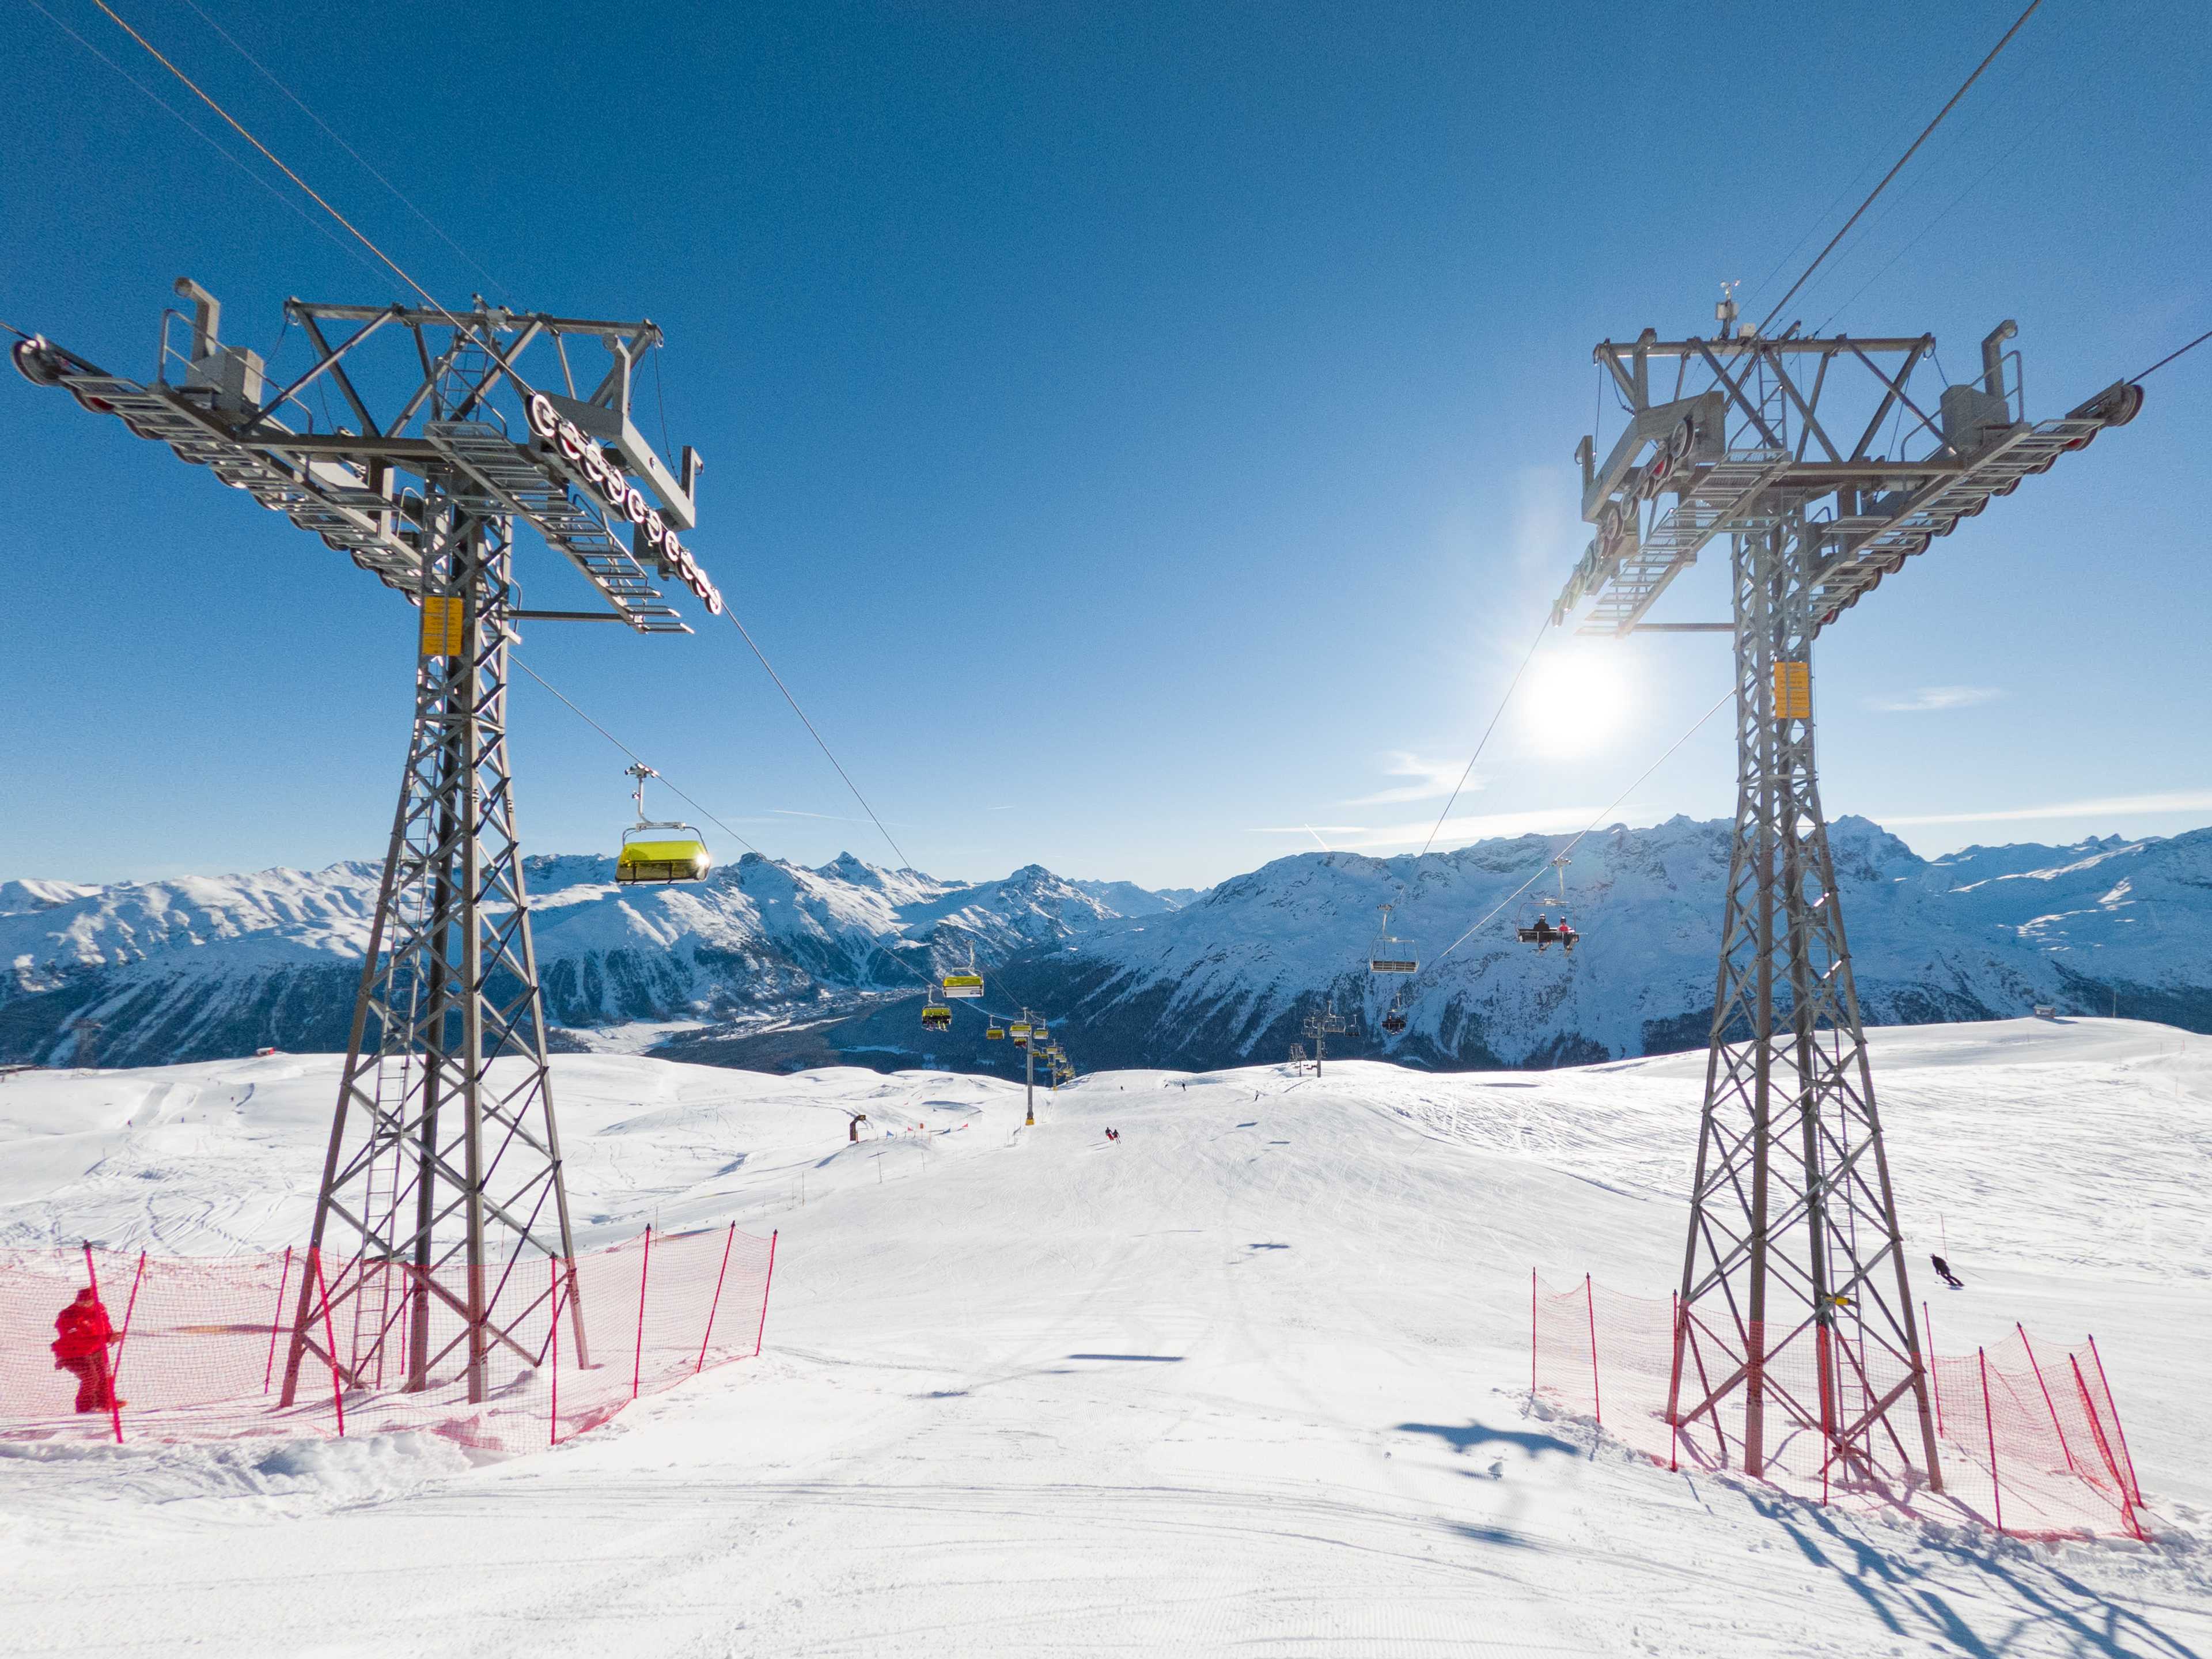 Alp Giop and Salastrains chairlifts, Munt da San Murezzan (2659 m a.s.l.), Corviglia, St. Moritz